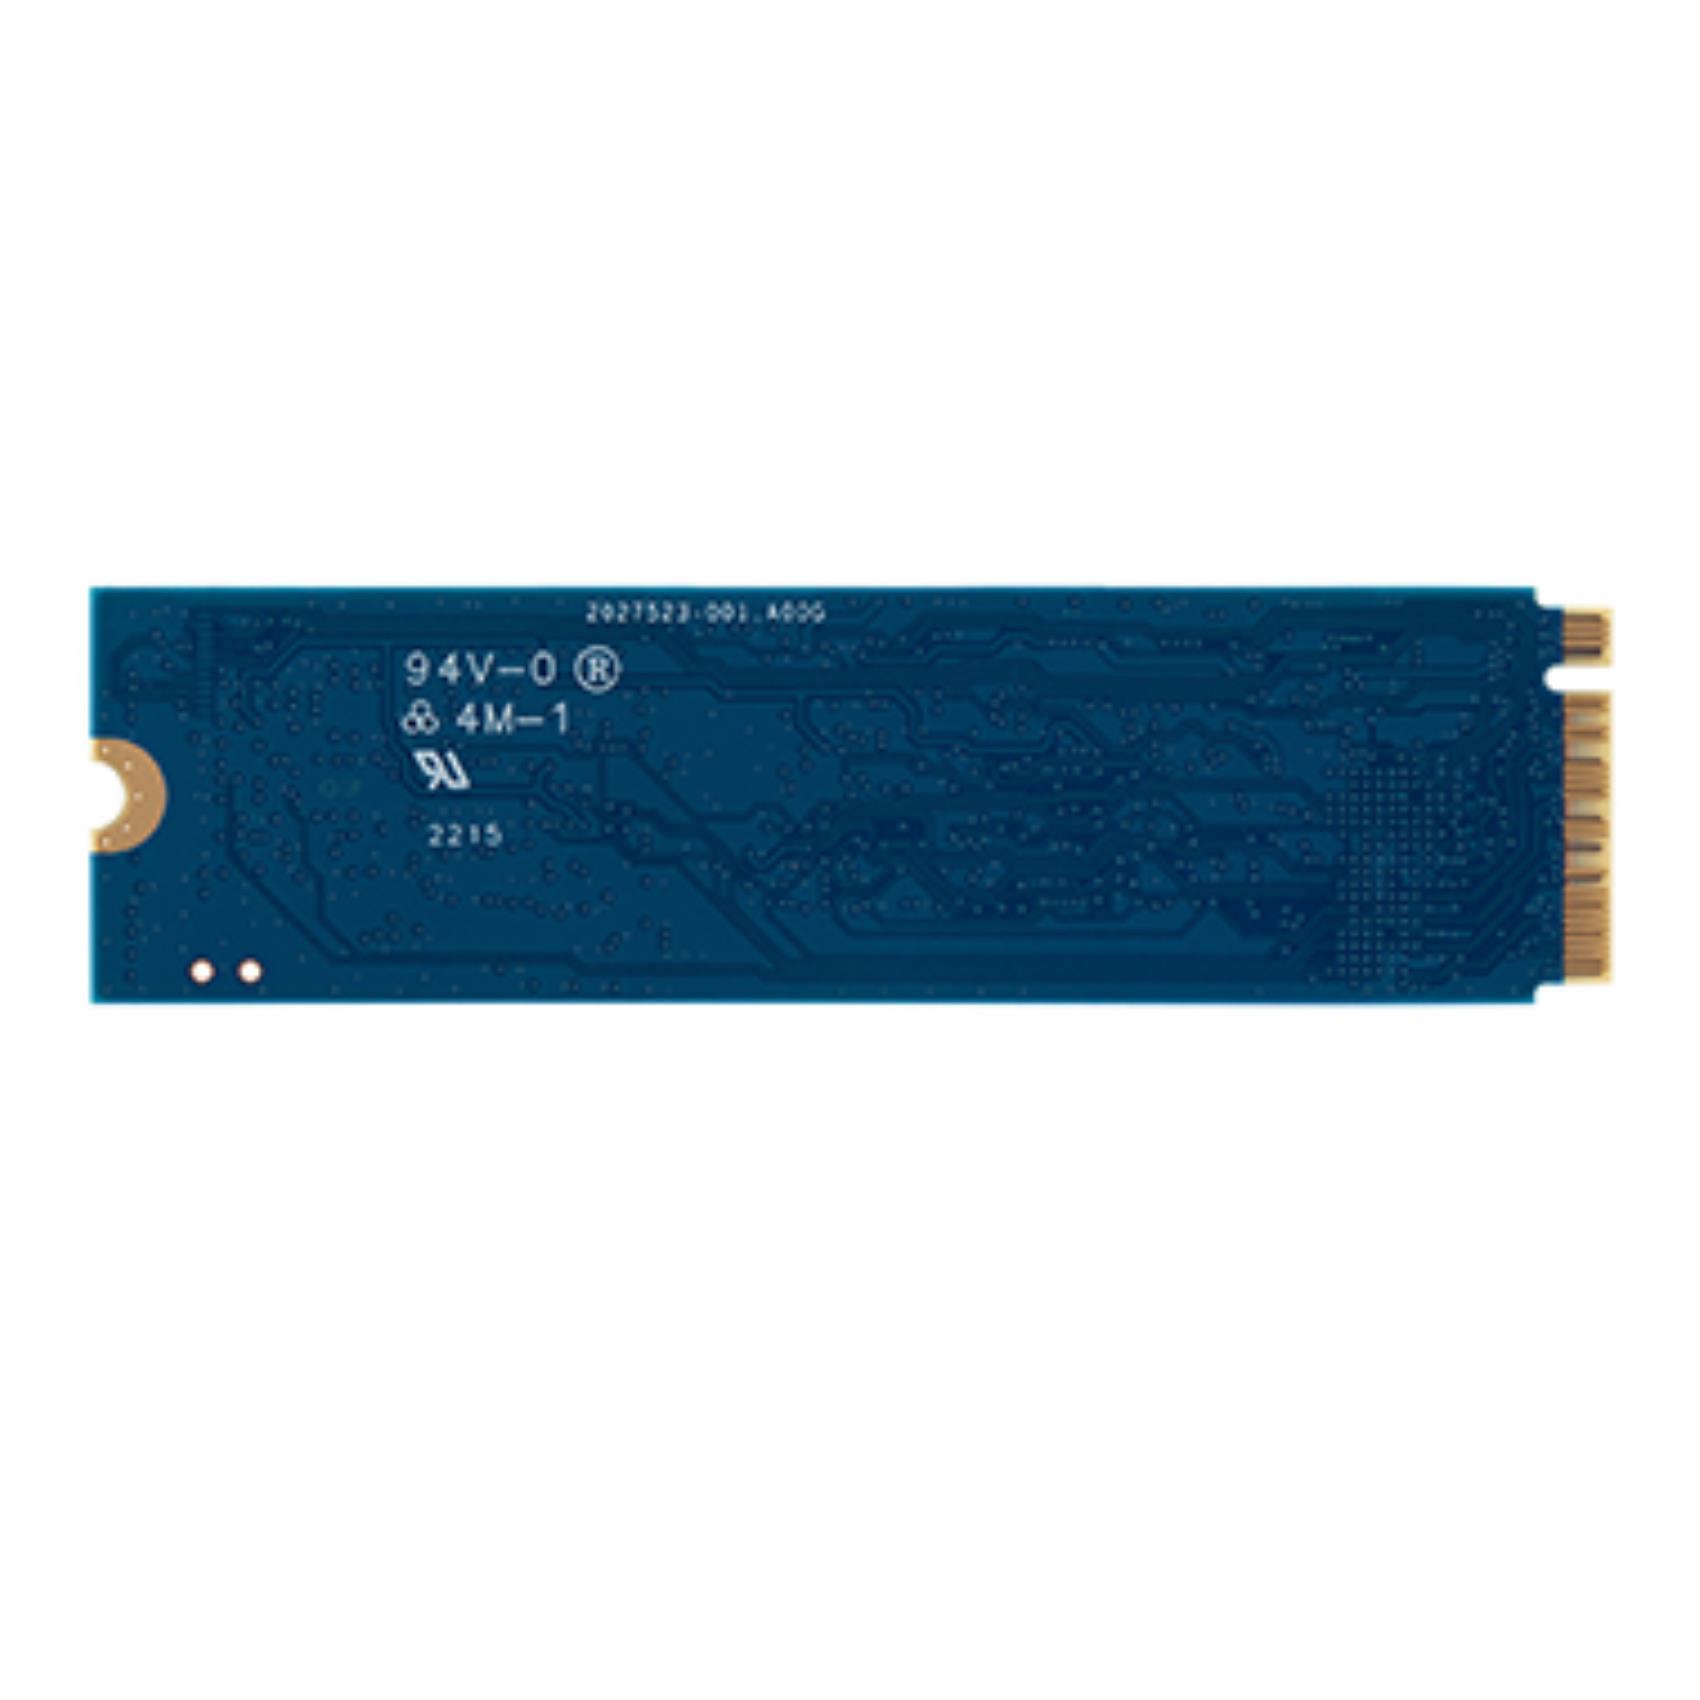 1000G NV2 M.2 2280 NVME SSD